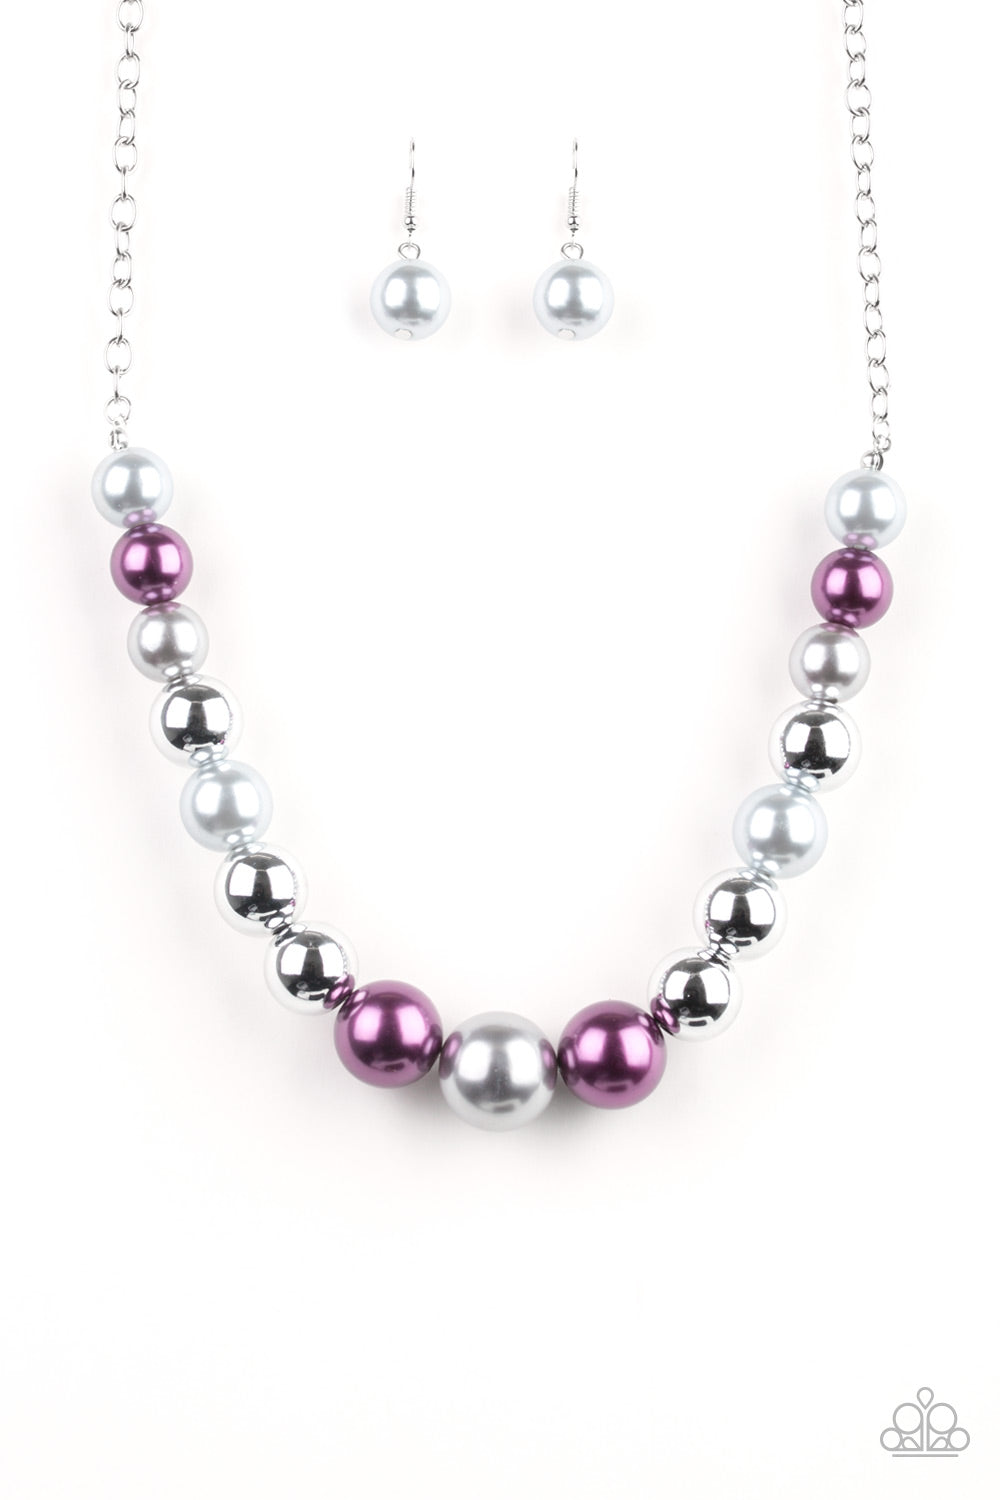 Take Note Multi Paparazzi Necklace Cashmere Pink Jewels - Cashmere Pink Jewels & Accessories, Cashmere Pink Jewels & Accessories - Paparazzi